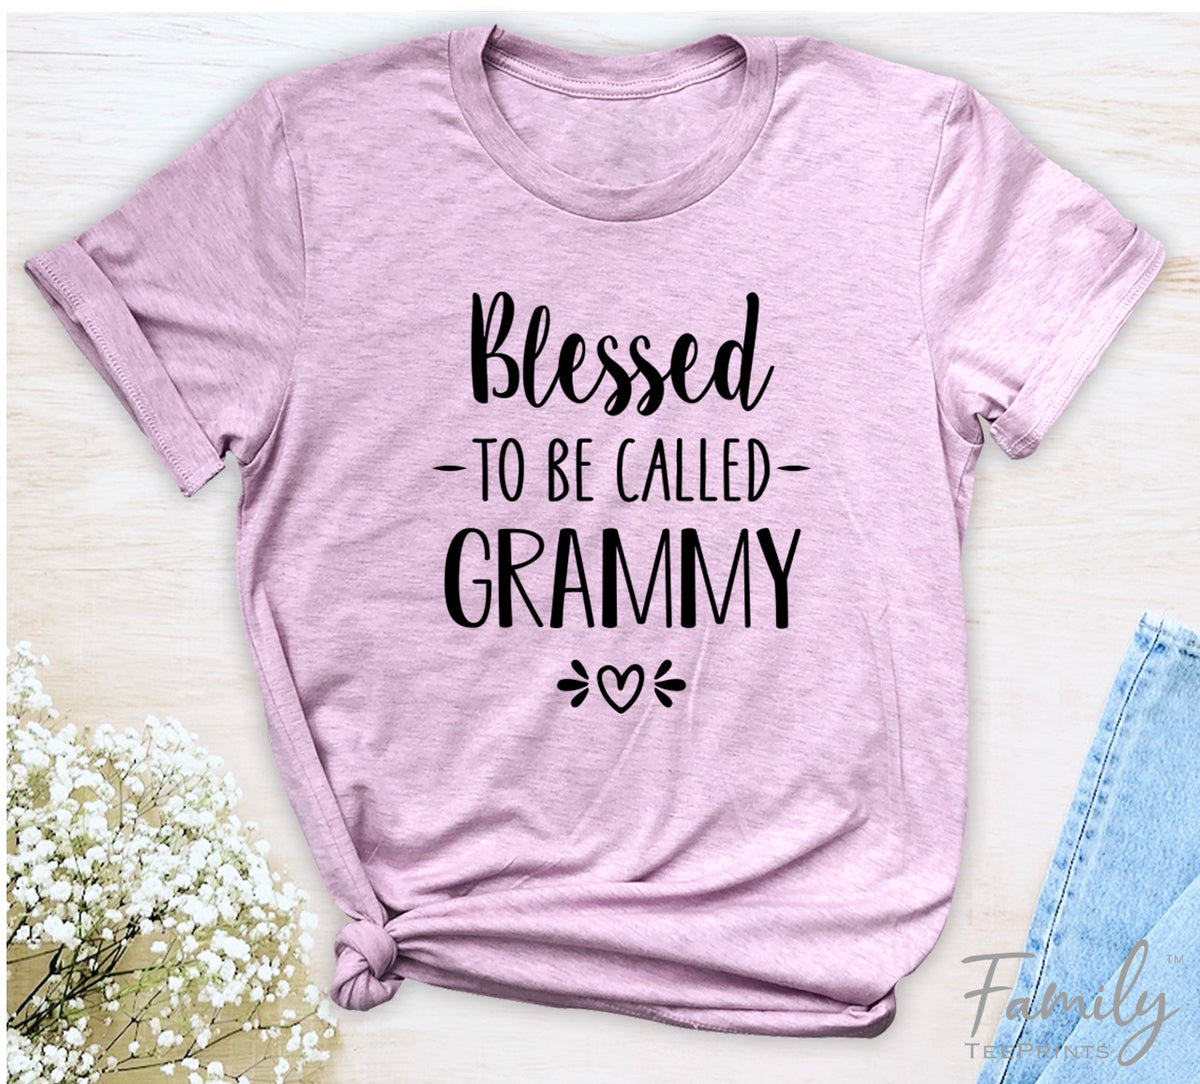 Blessed To Be Called Grammy - Unisex T-shirt - Grammy Shirt - Gift For New Grammy - familyteeprints